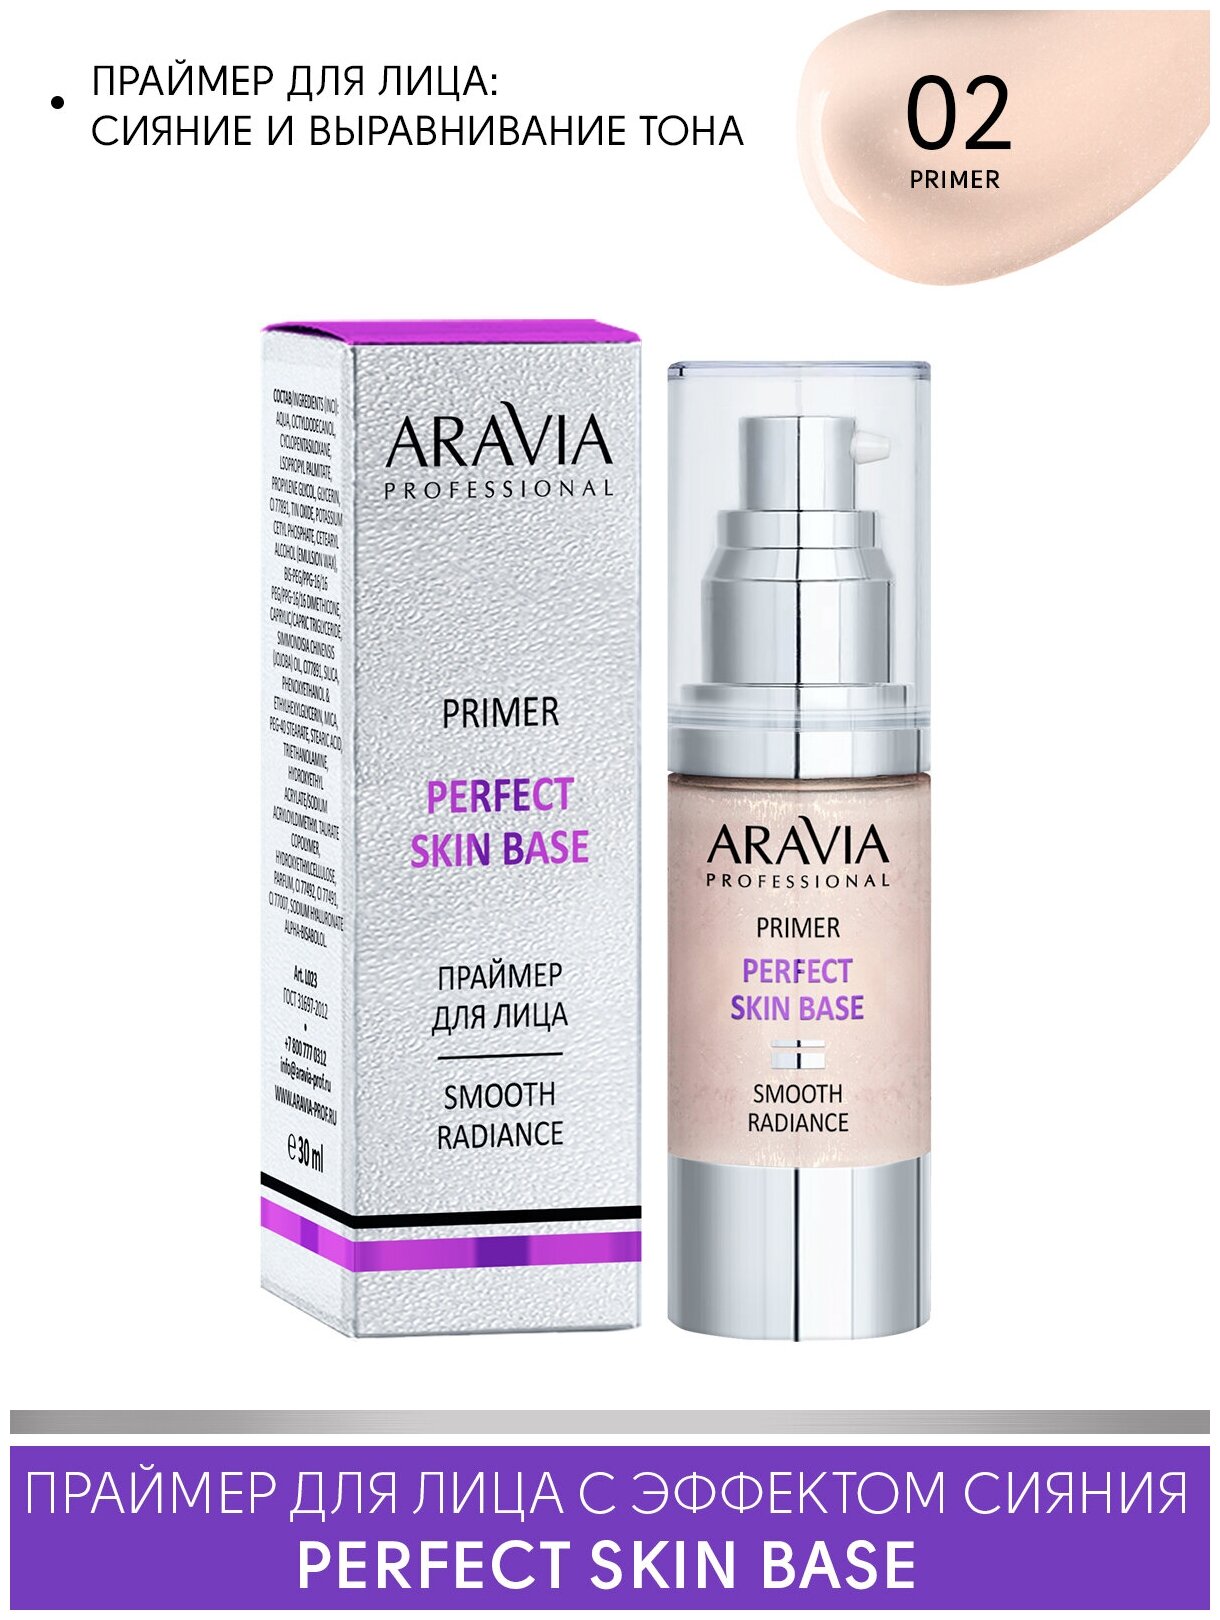 ARAVIA Праймер для лица с эффектом сияния Perfect Skin Base 30 мл